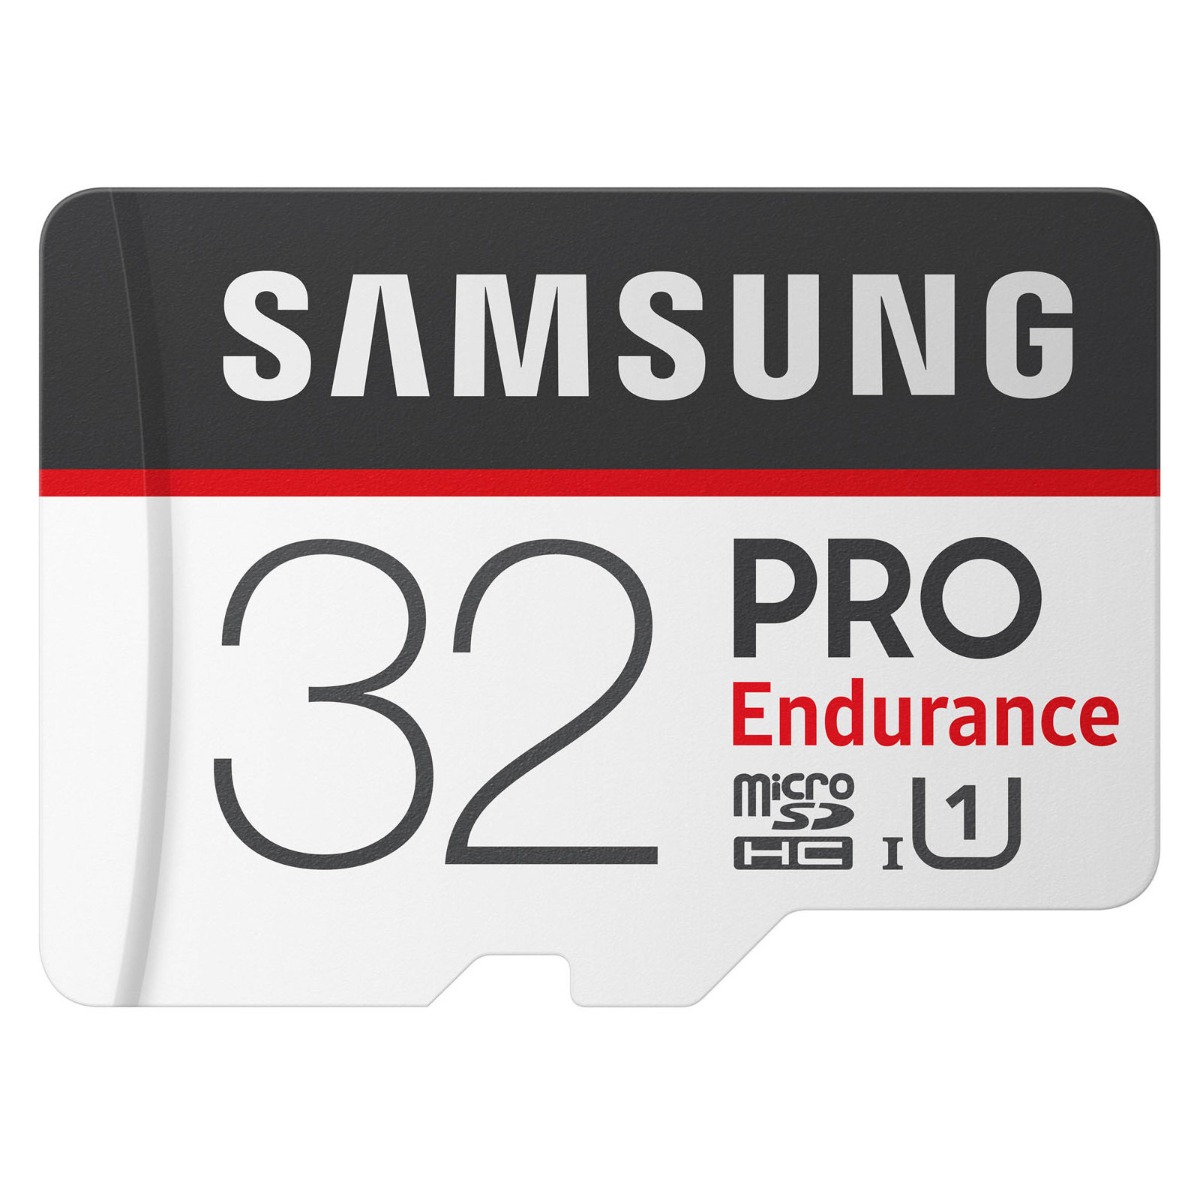 Samsung Micro SDHC Card PRO Endurance